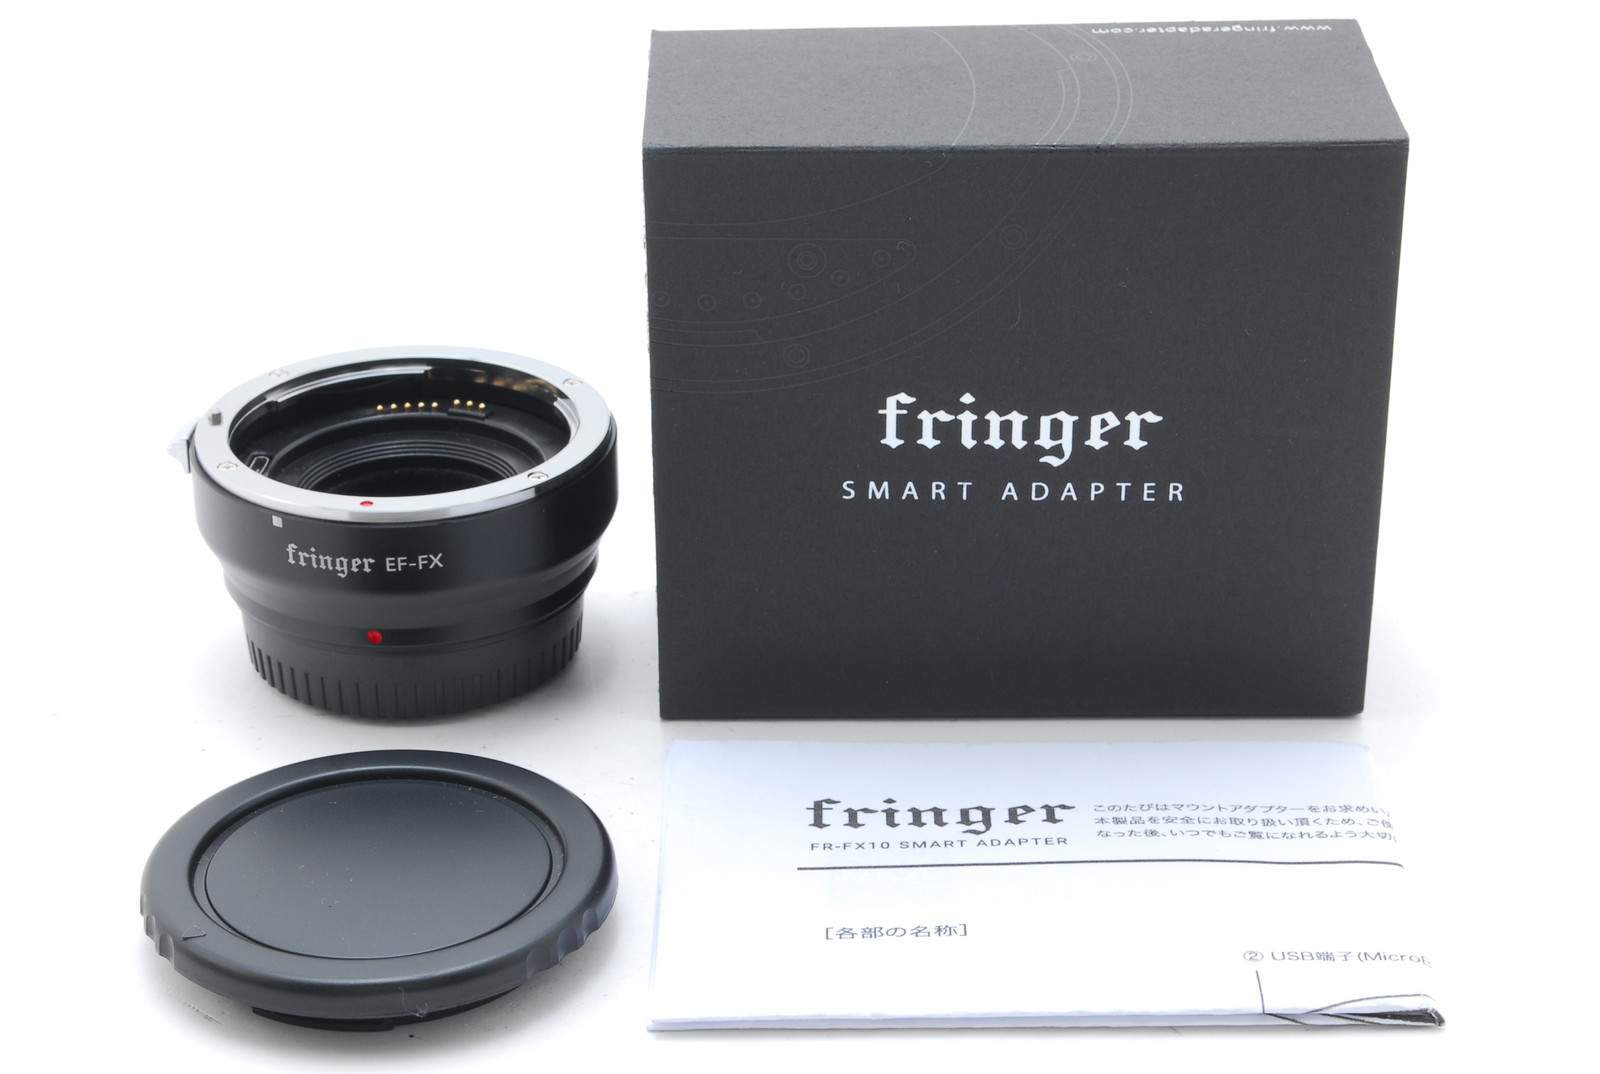 PROMOTION.MINT Fringer SMART ADAPTER EF-FX Standard Version W/ Box, Manual from Japan